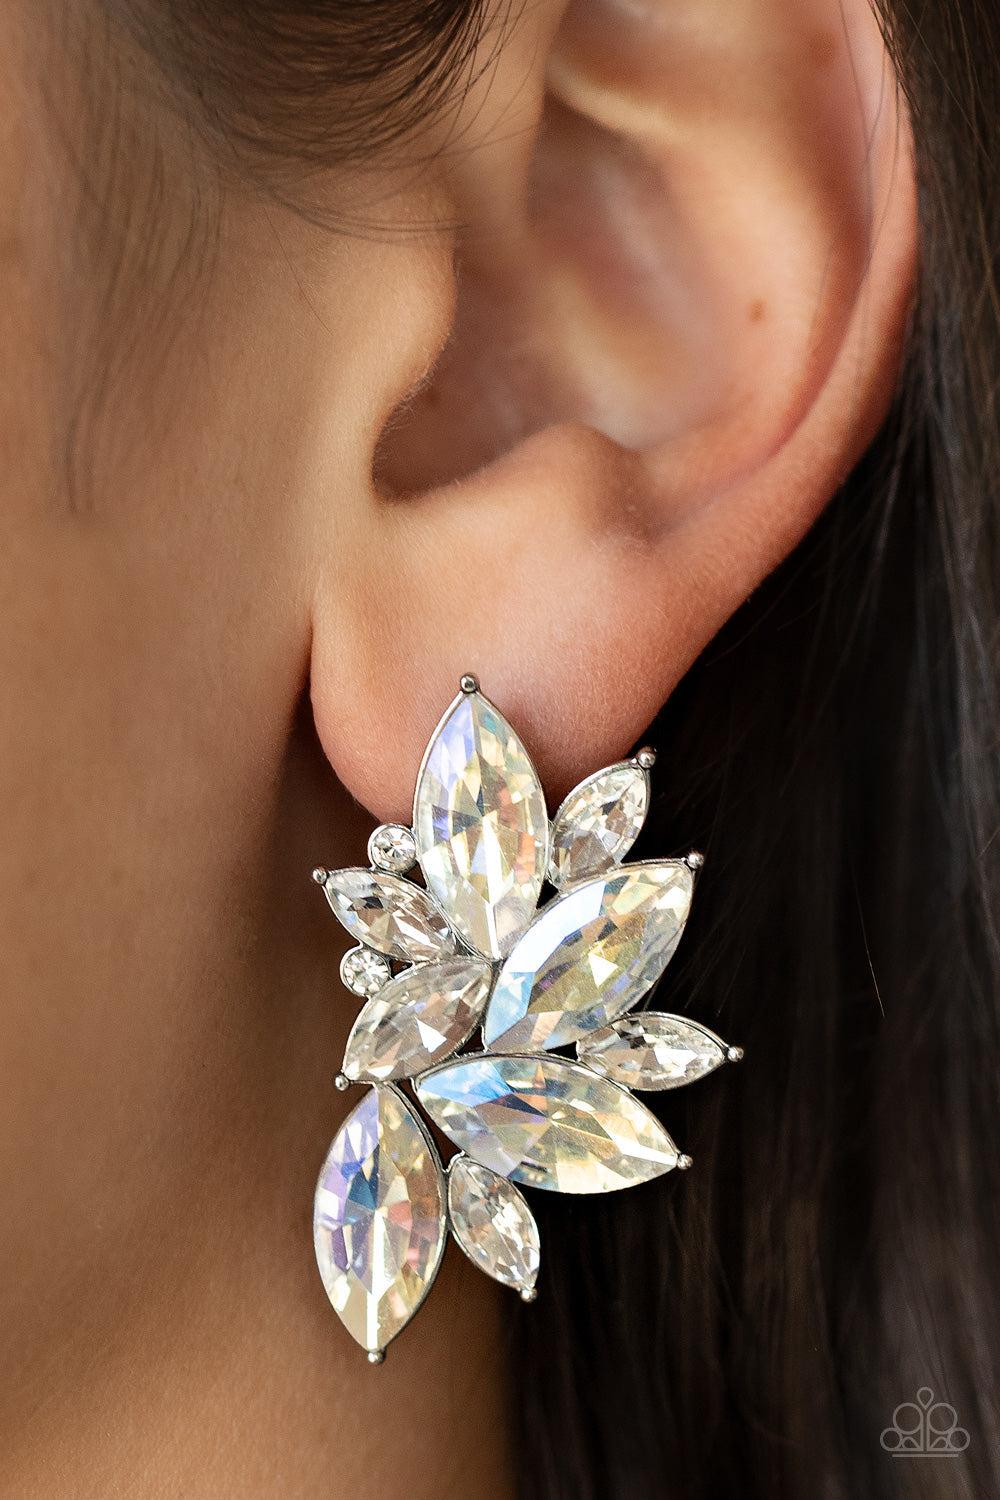 Instant Iridescence White Iridescent Rhinestone Earrings - Paparazzi Accessories- lightbox - CarasShop.com - $5 Jewelry by Cara Jewels